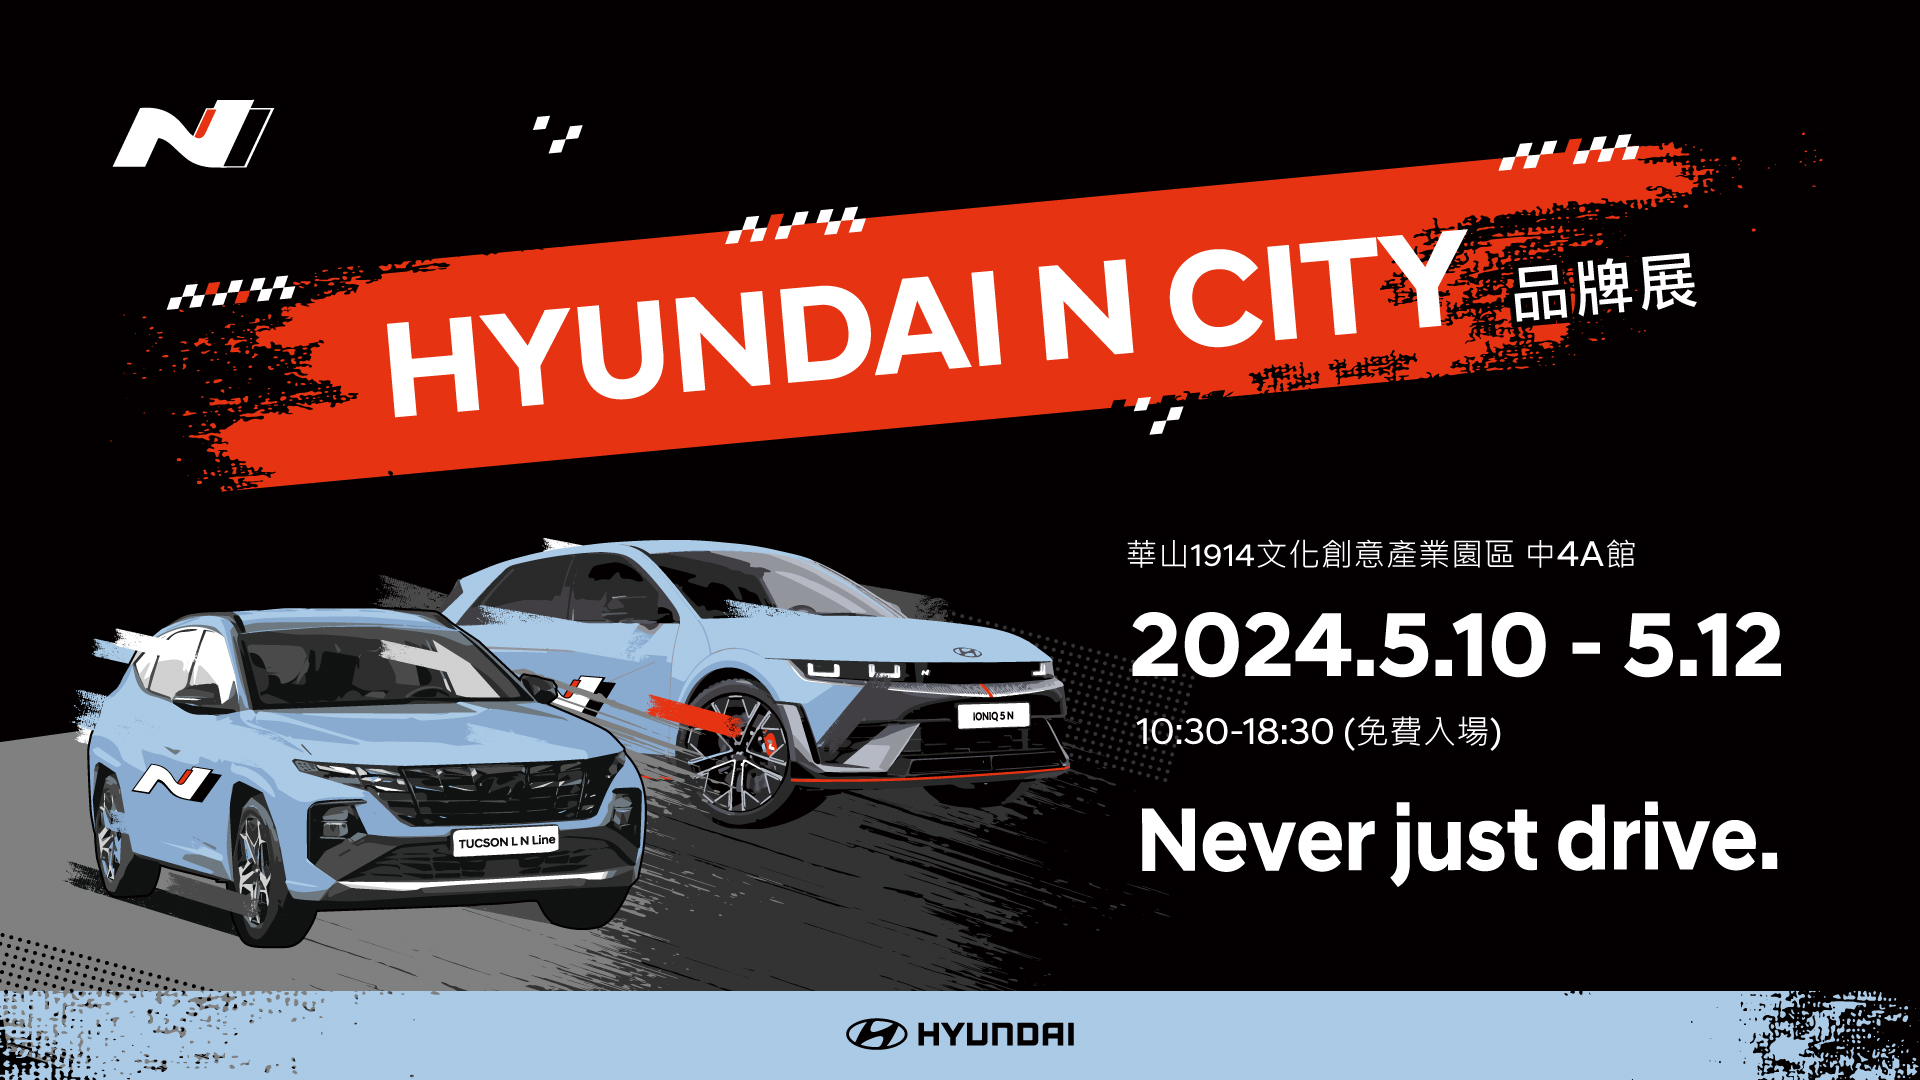 【HYUNDAI新聞稿】HYUNDAI N City品牌展510-512華山園區首度展出.jpg